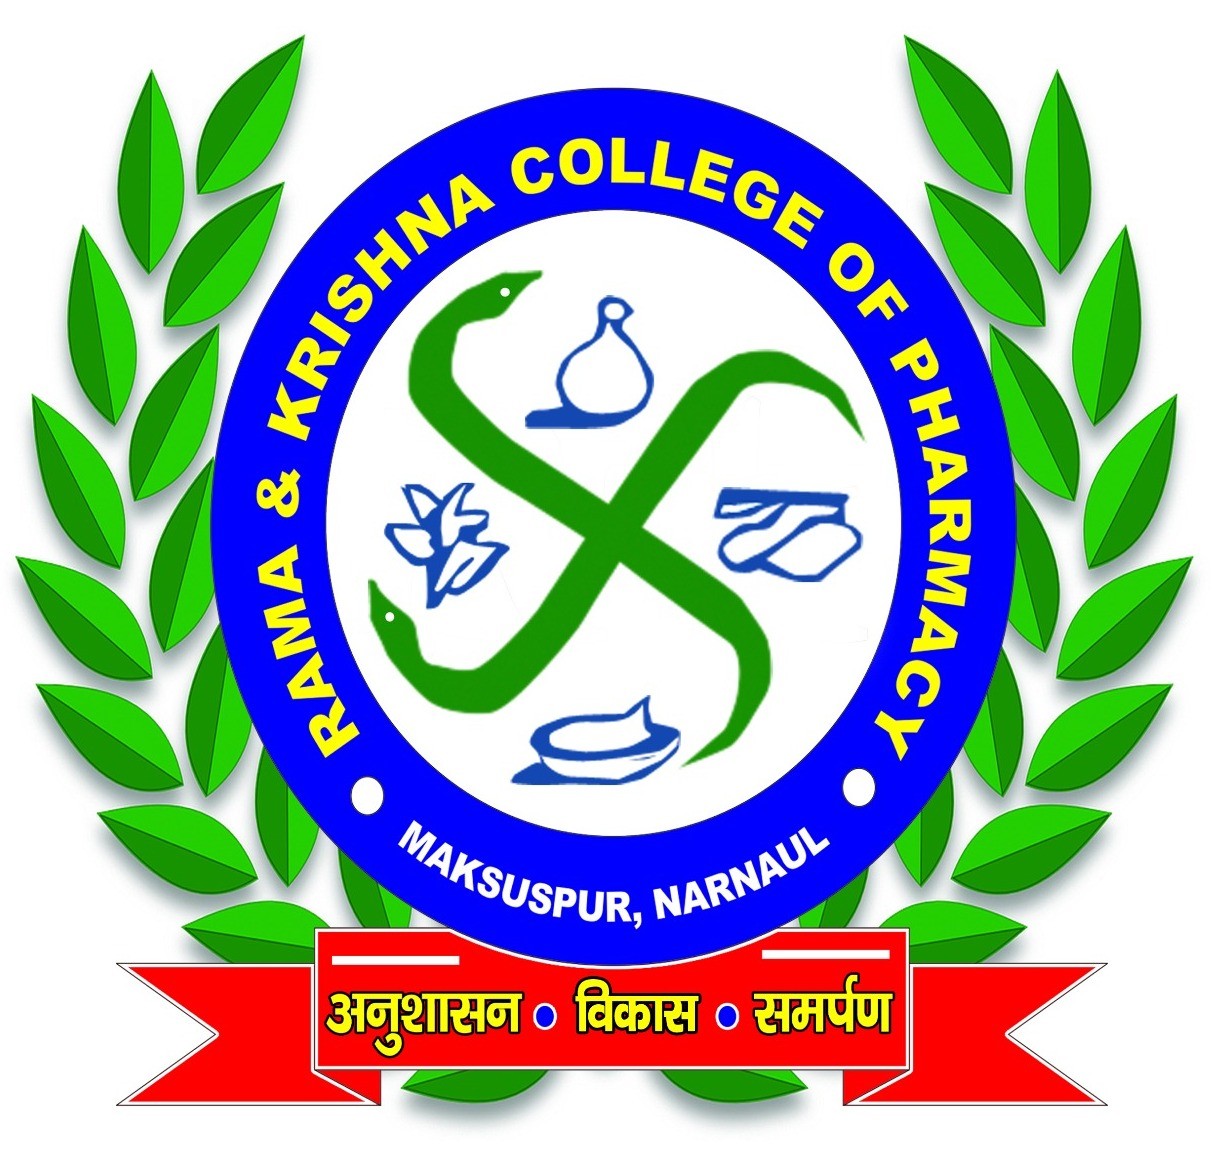 Rama and Krishna College of Pharmacy, Mahendragarh